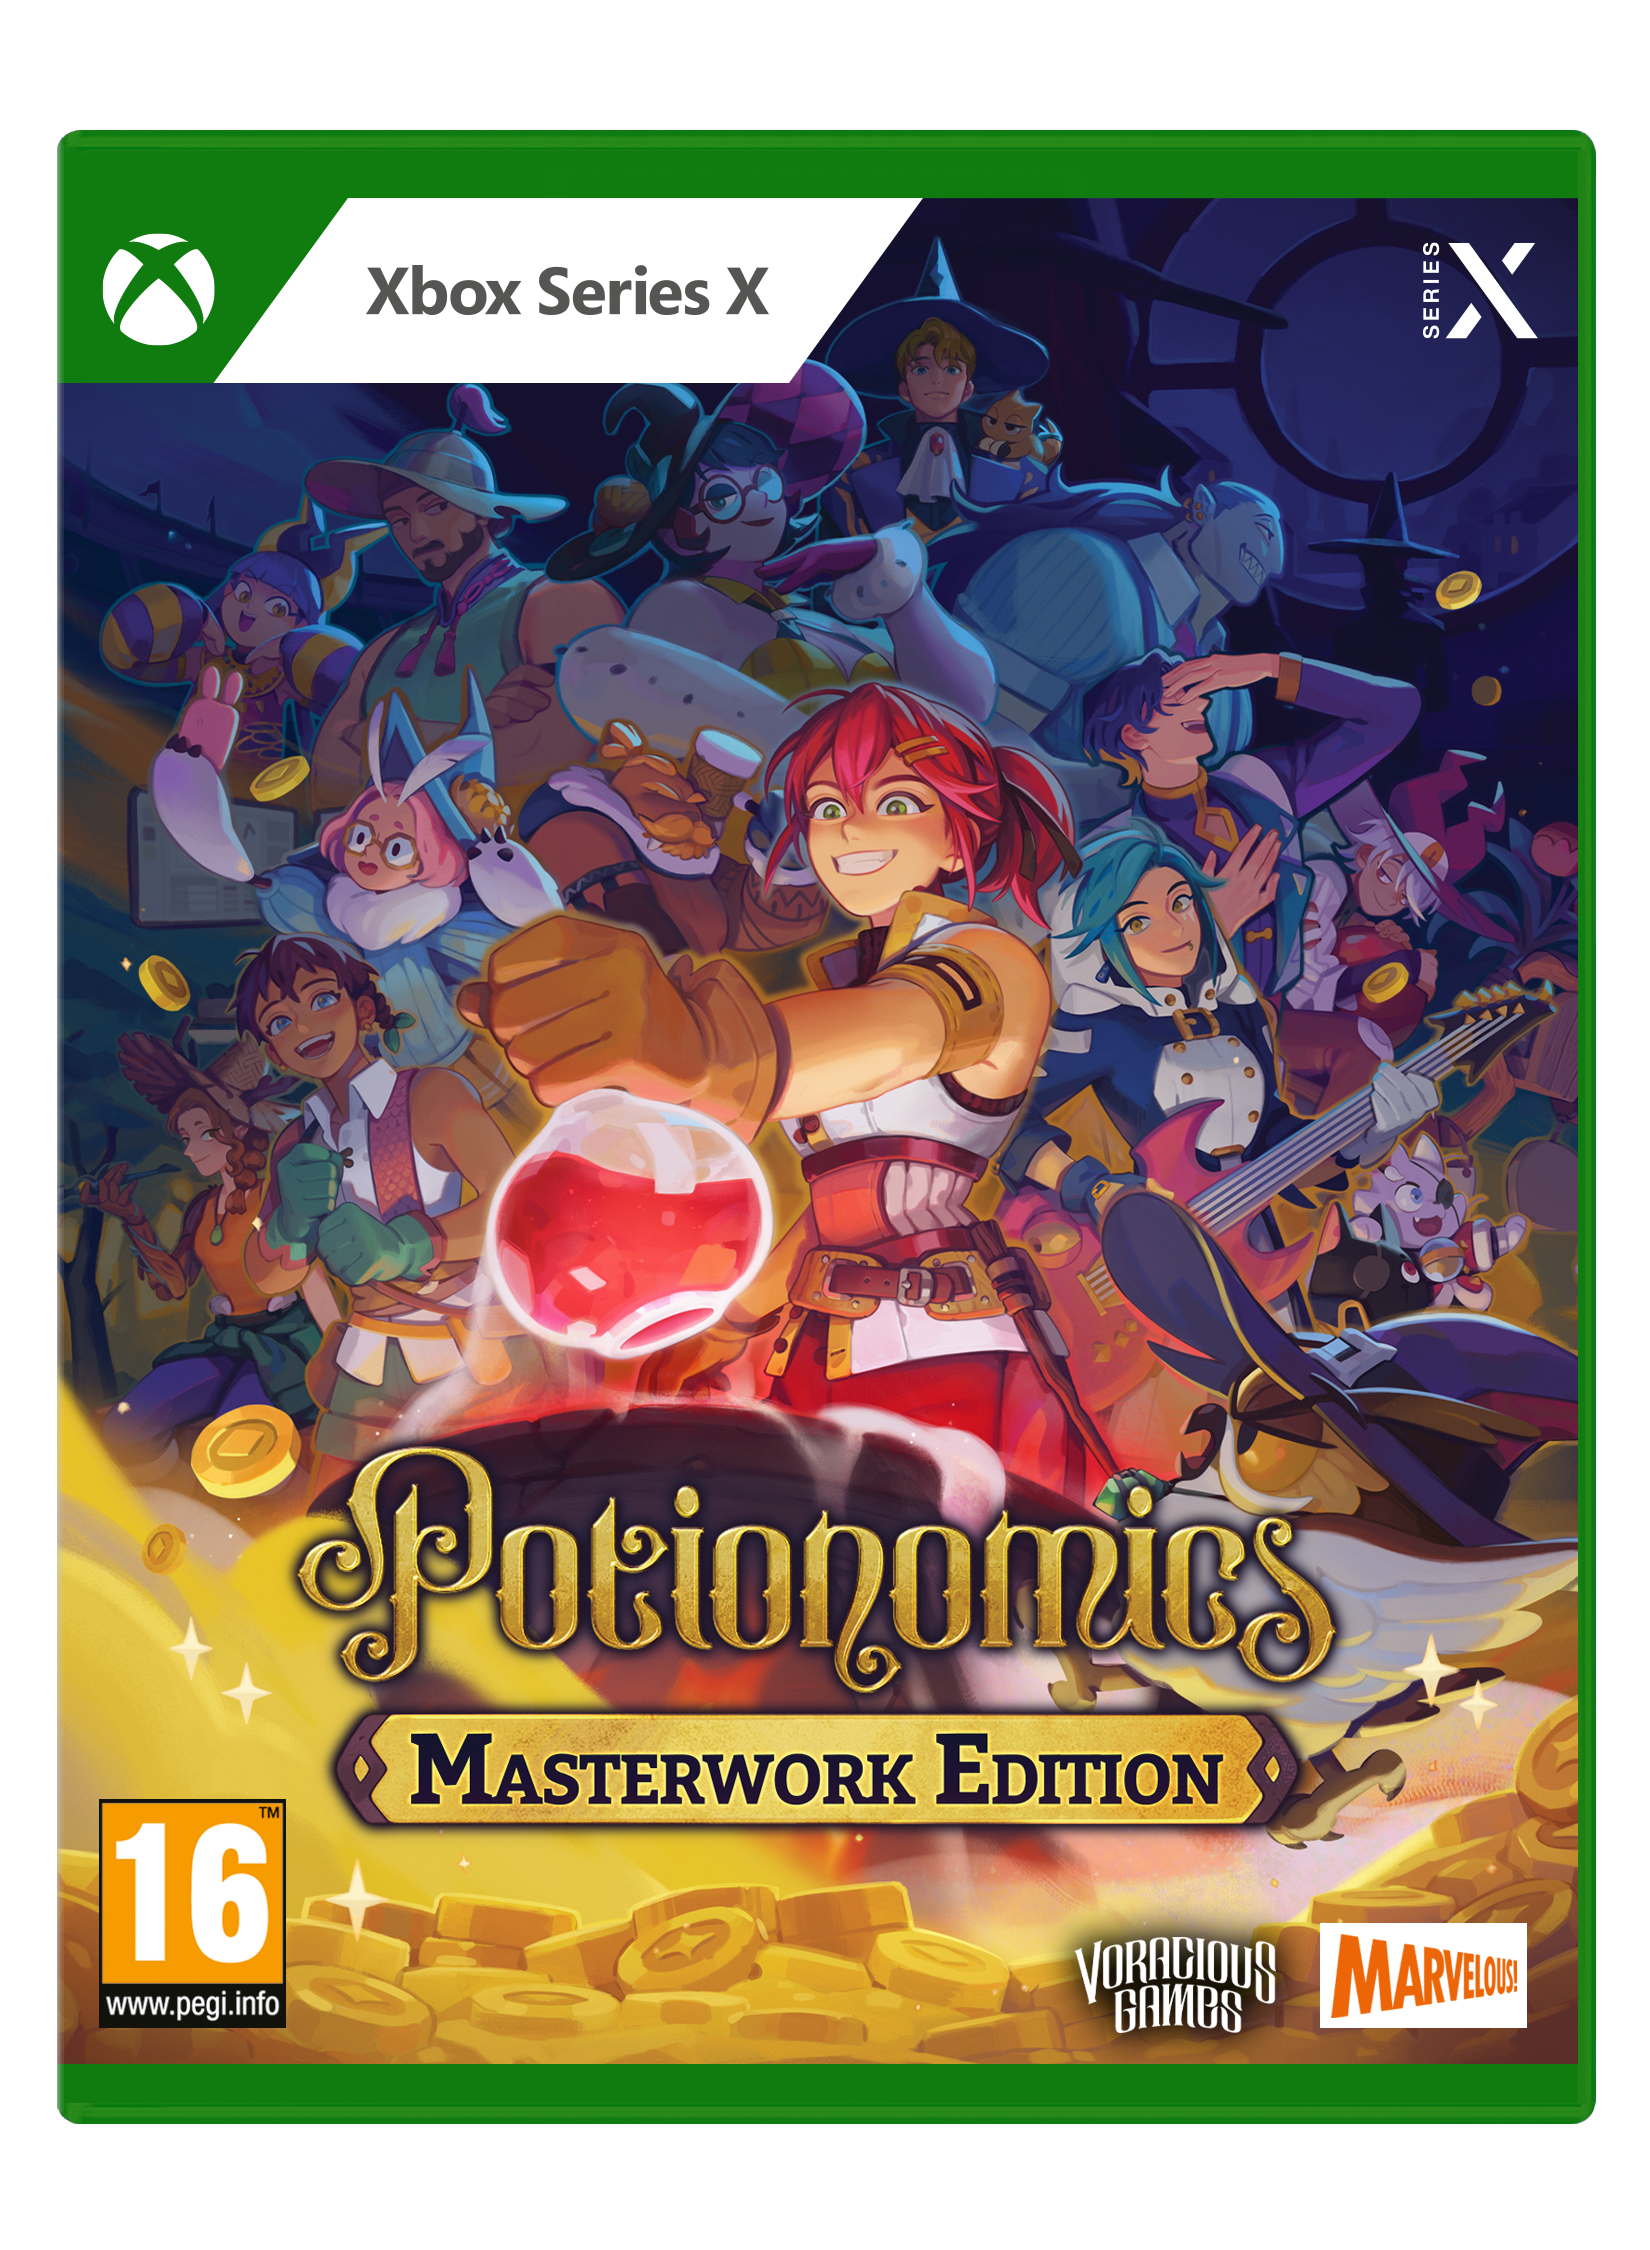 Xbox Series X Potionomics: Masterwork Edition - Albagame